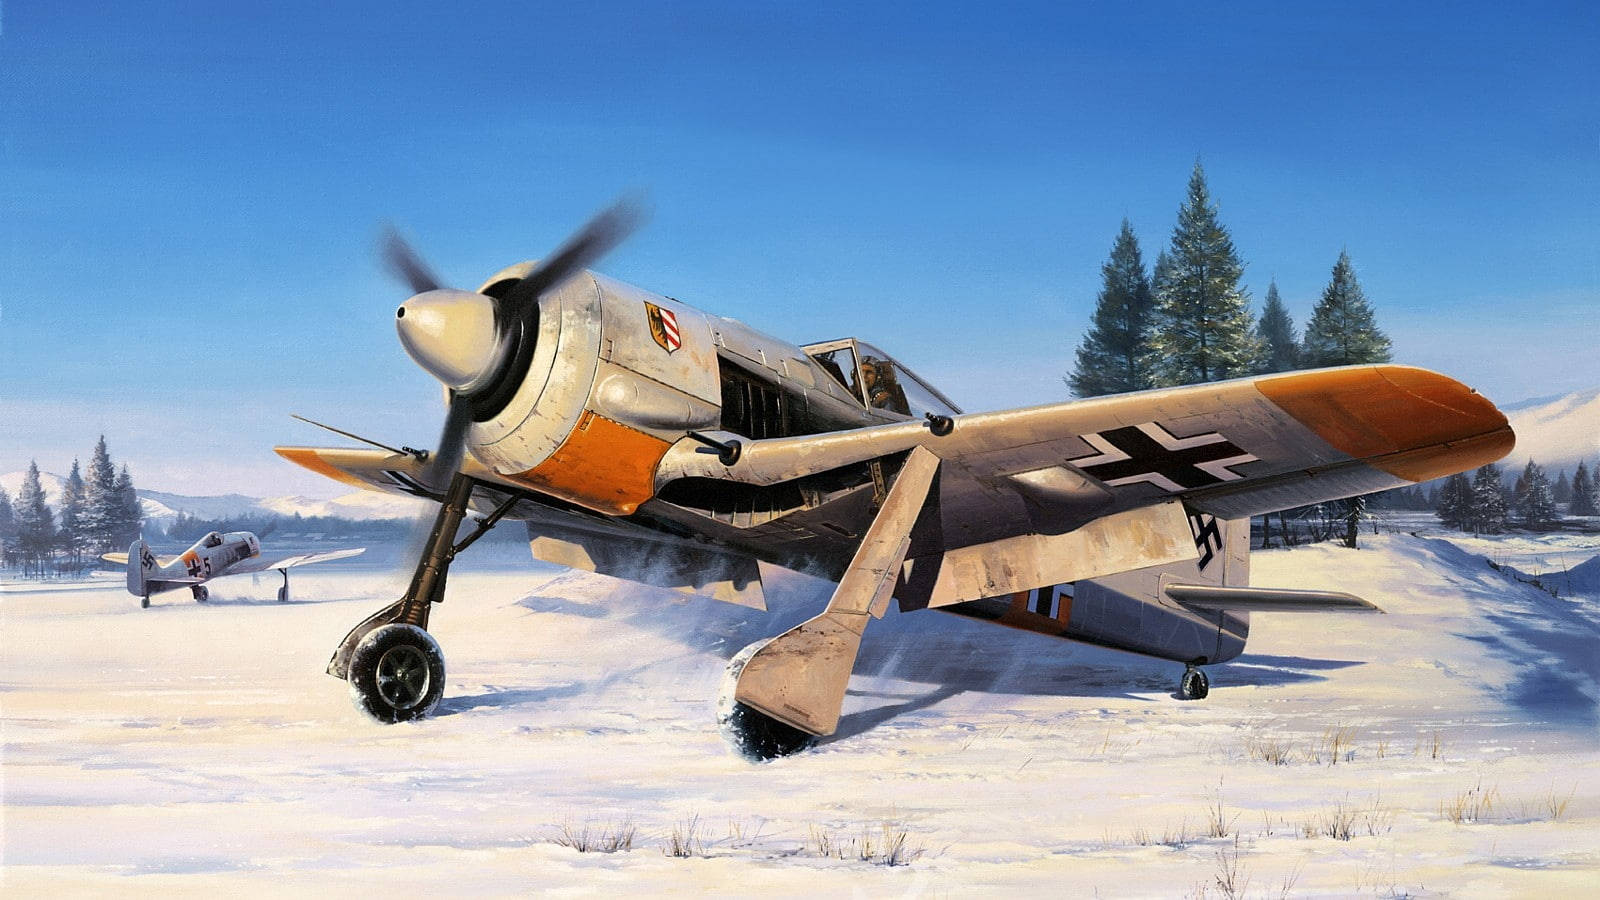 German Ww2 Fighters On Snowy Ground Wallpaper